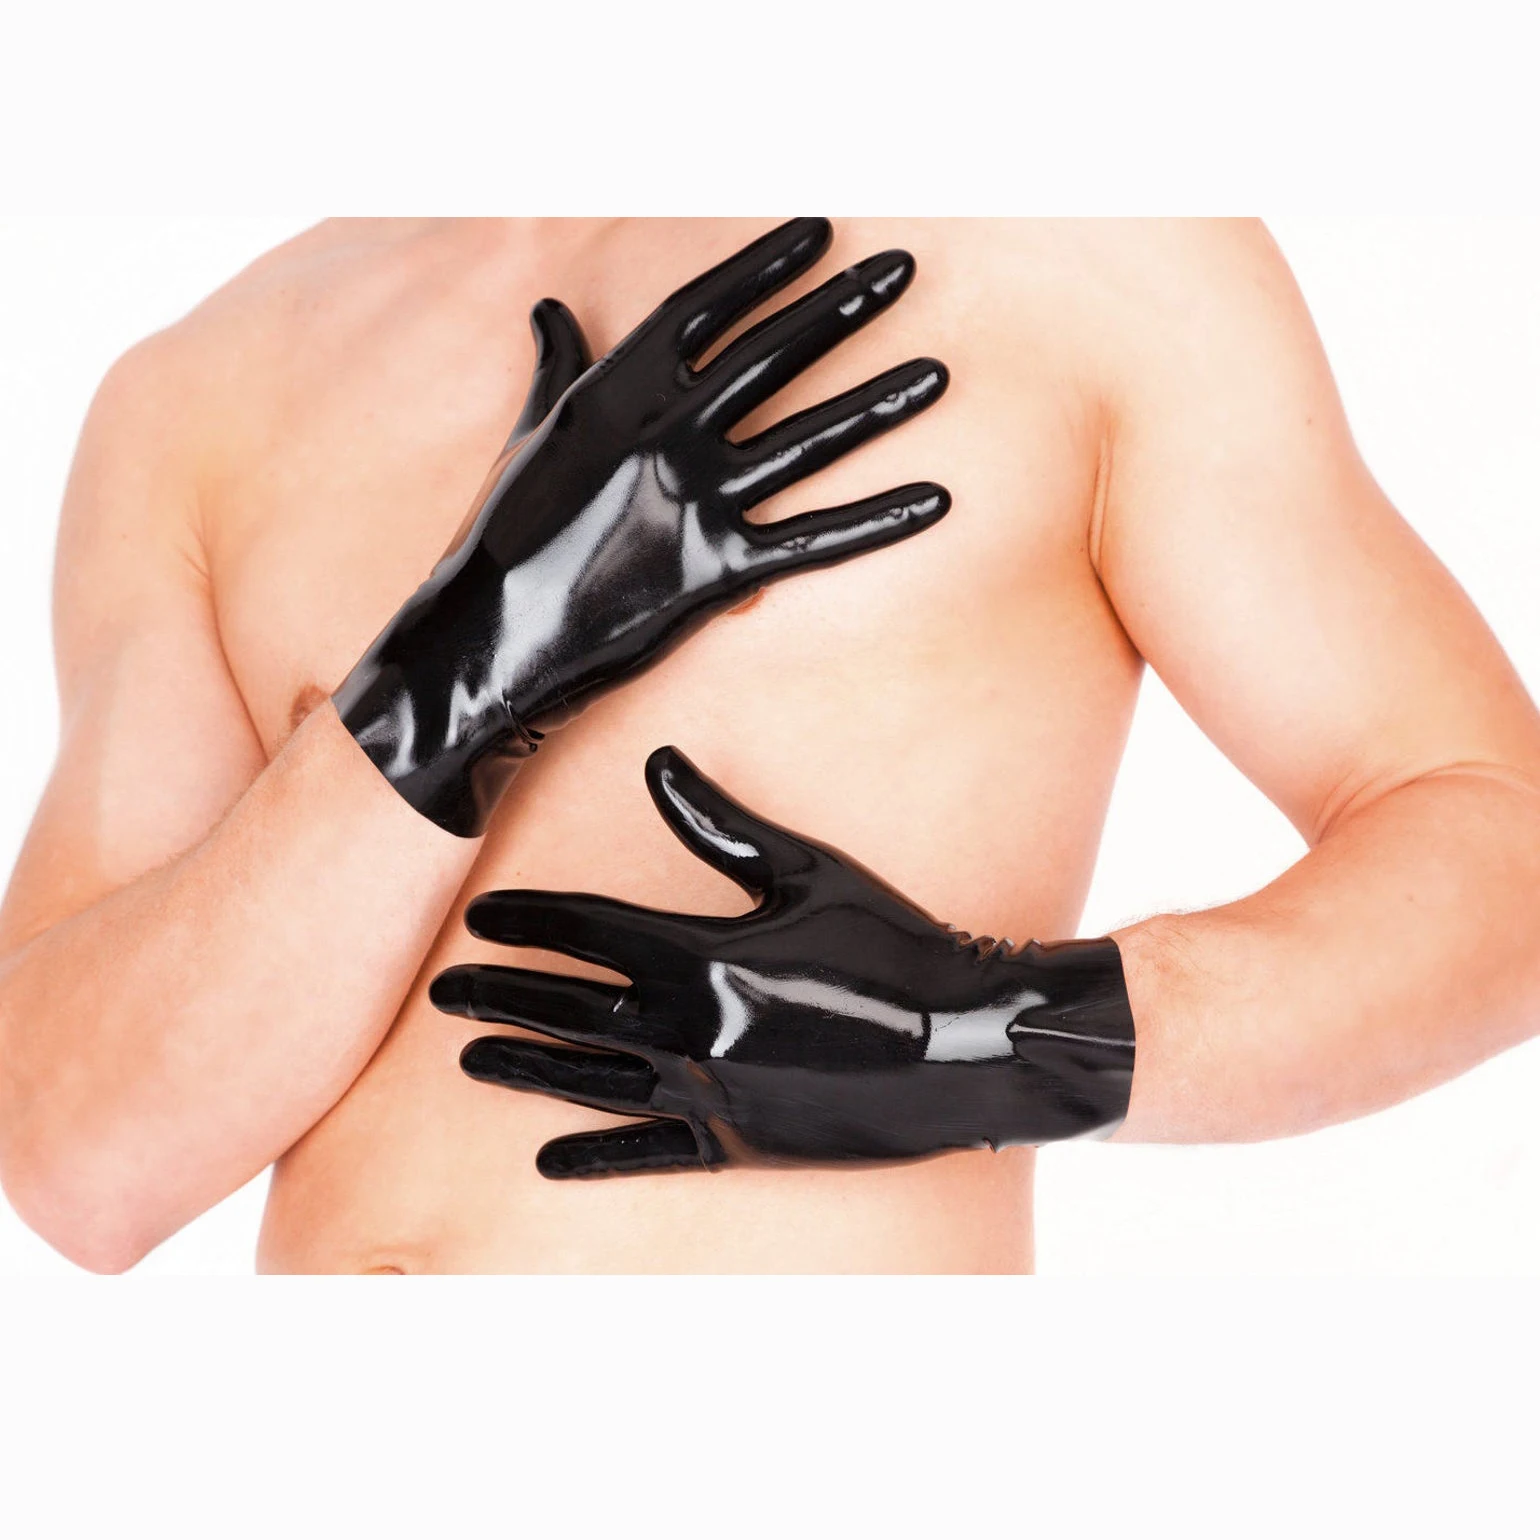 Latex gloves teen